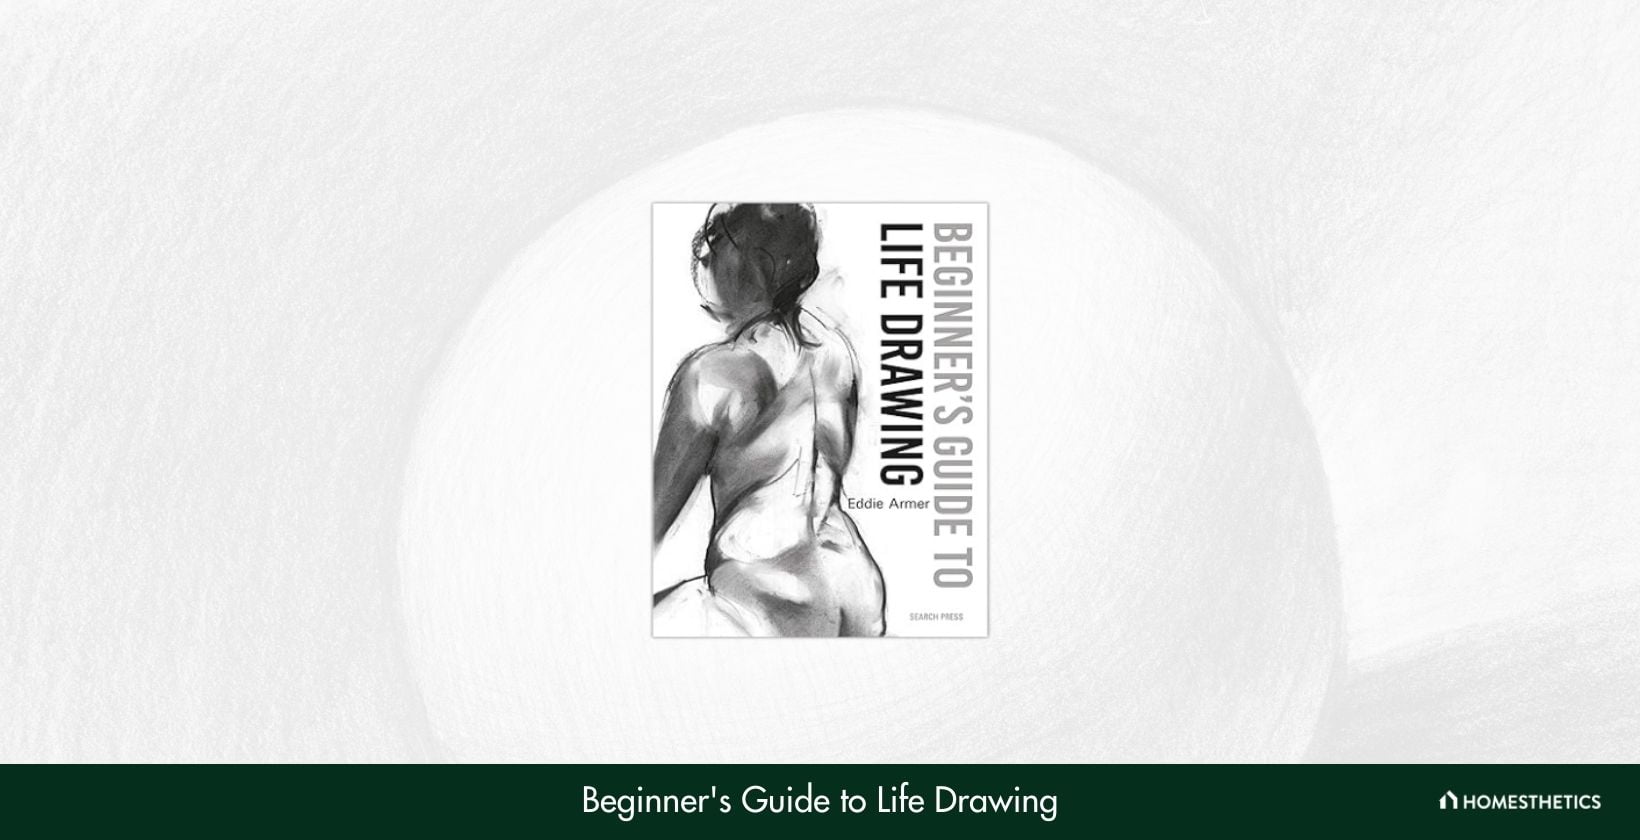 Beginners Guide to Life Drawing by Eddie Armer